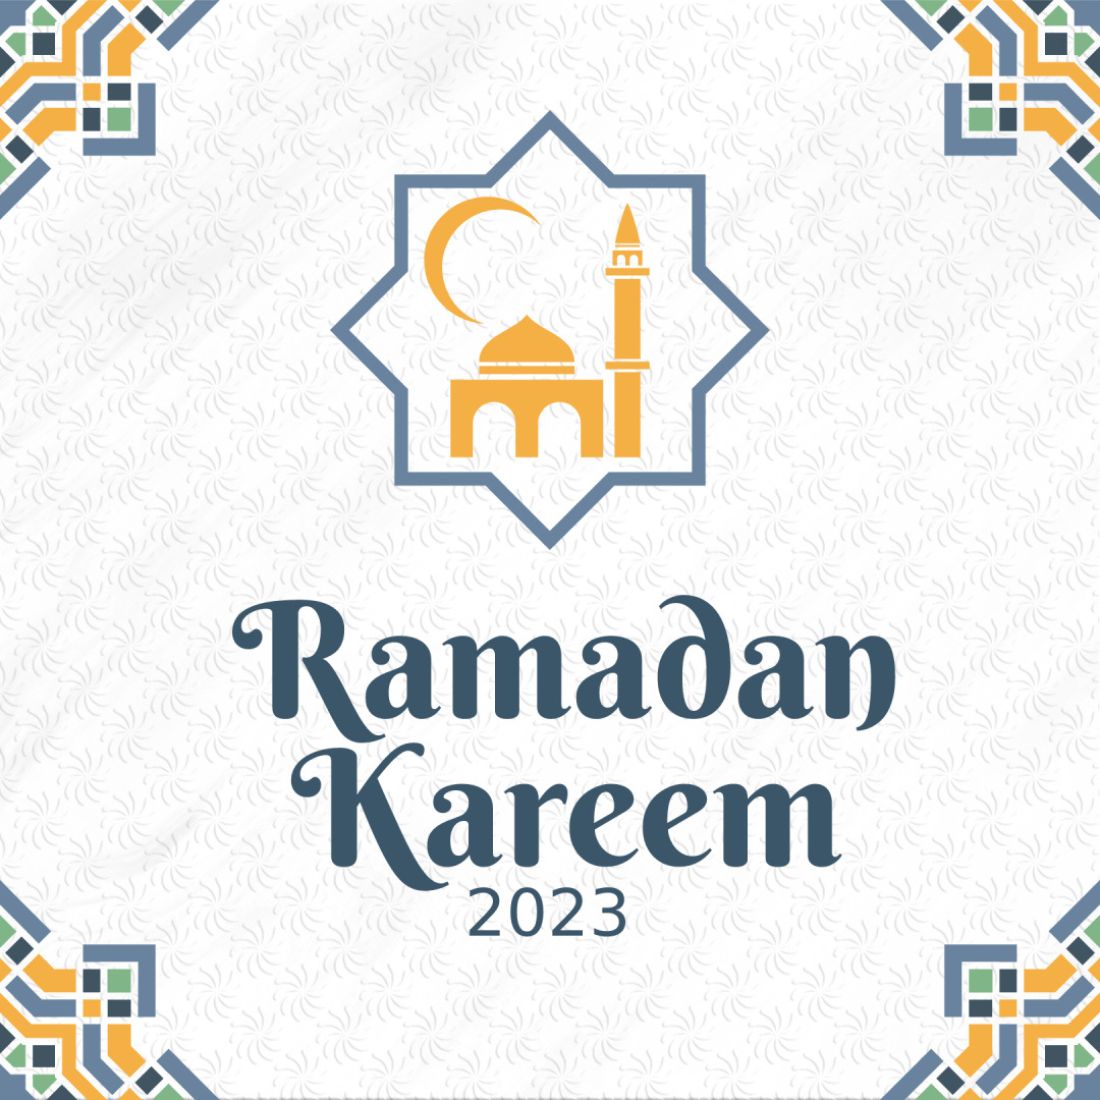 Ramadan Special Social Media Post Template cover image.